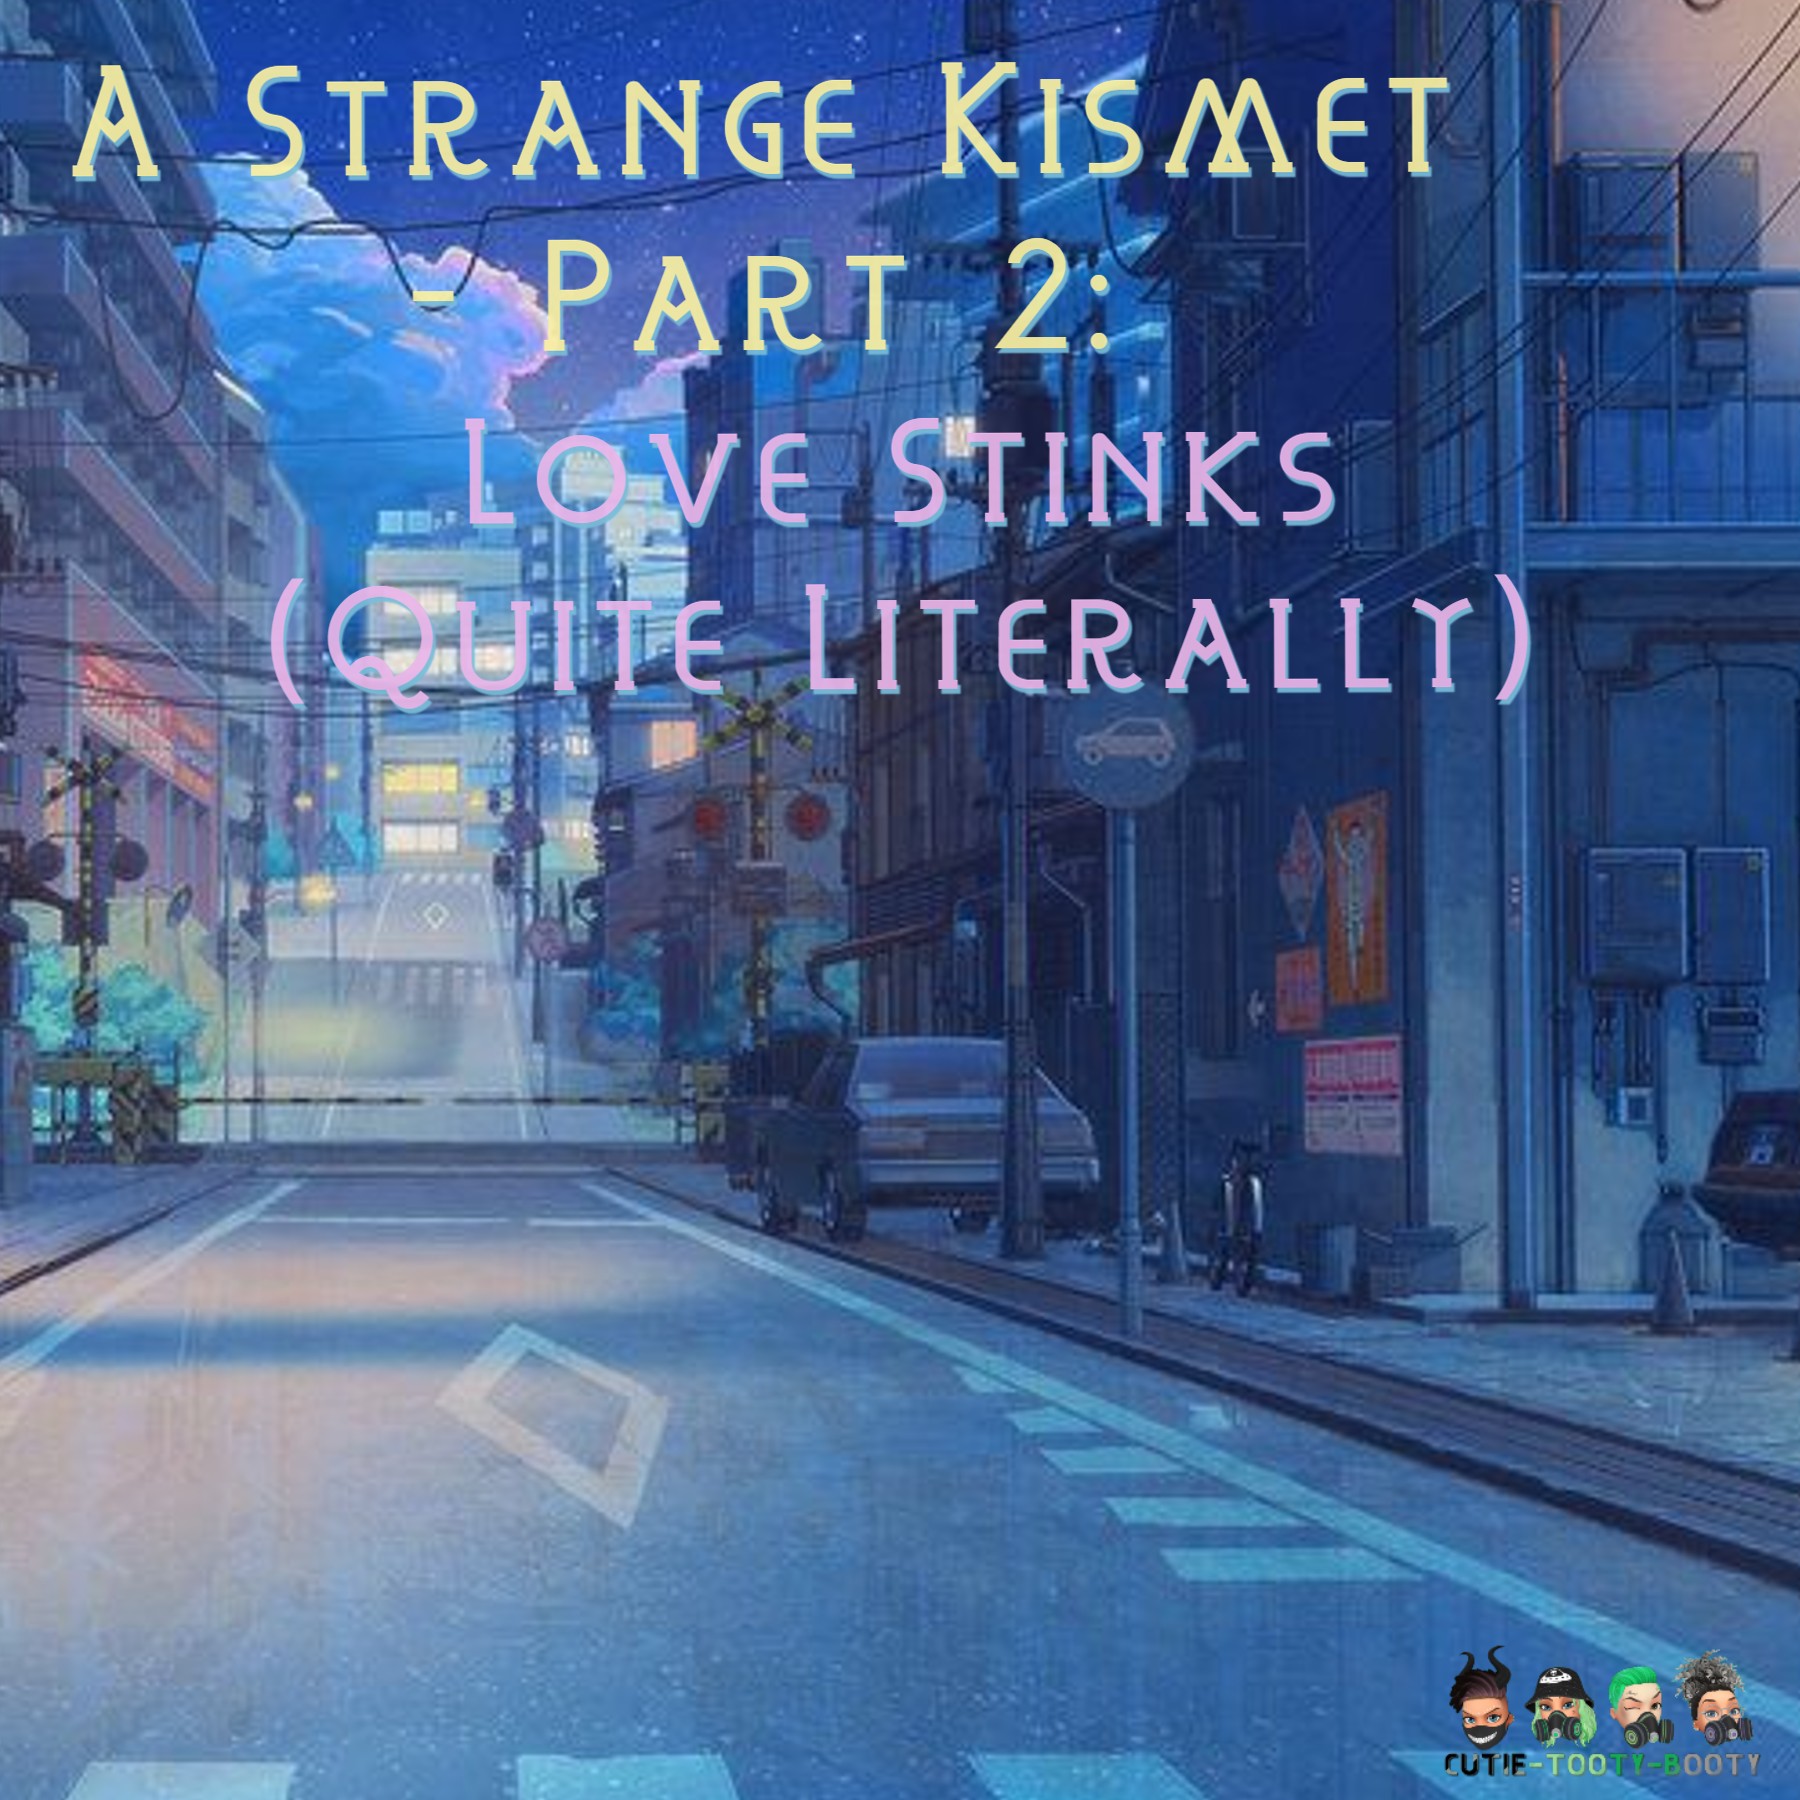 A Strange Kismet - Part 2: Love Stinks Quite Literally